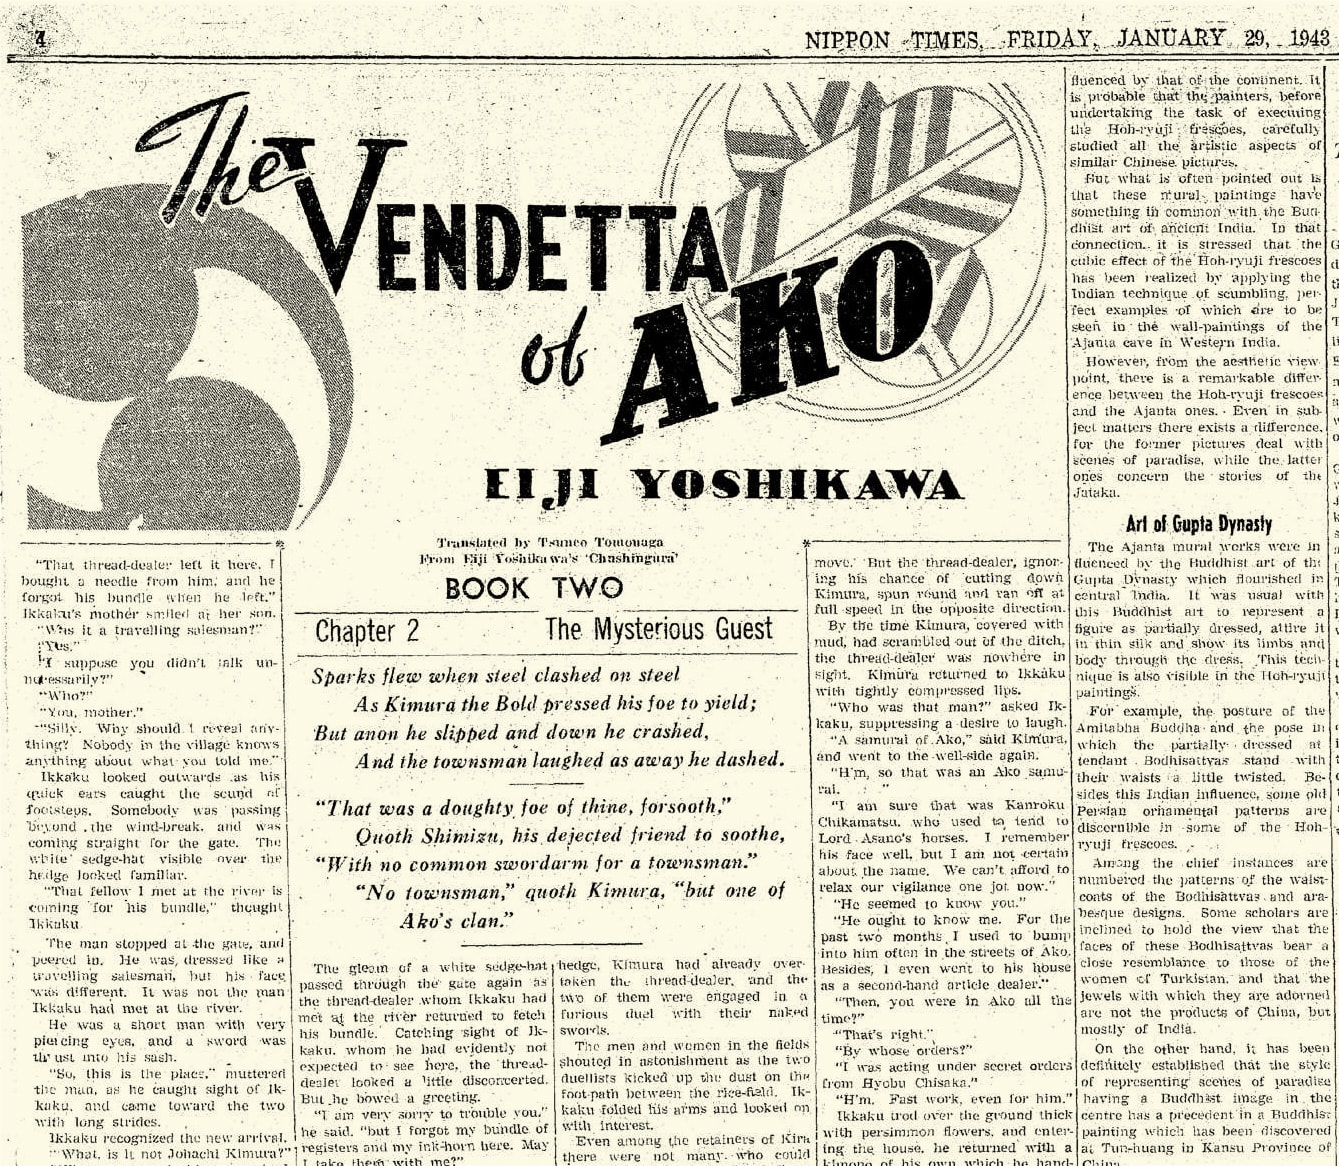 New discoveries: English translations of Eiji Yoshikawa during wartime